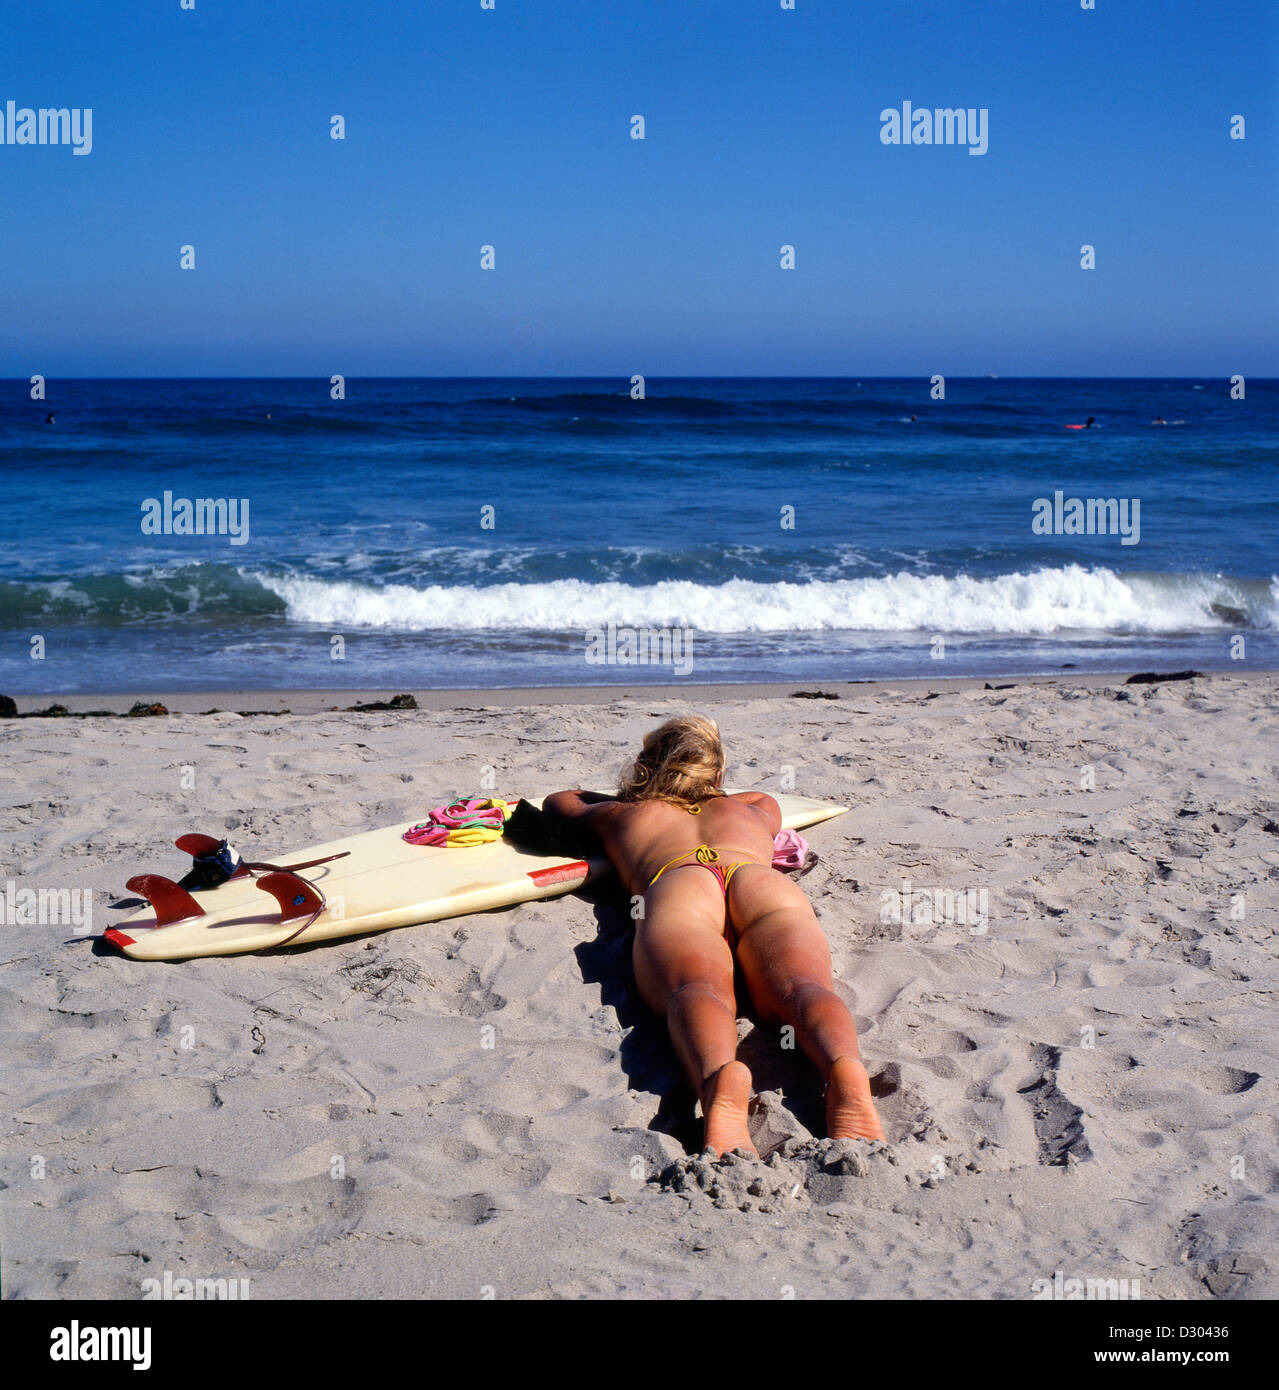 wife nude beach Adult Pics Hq